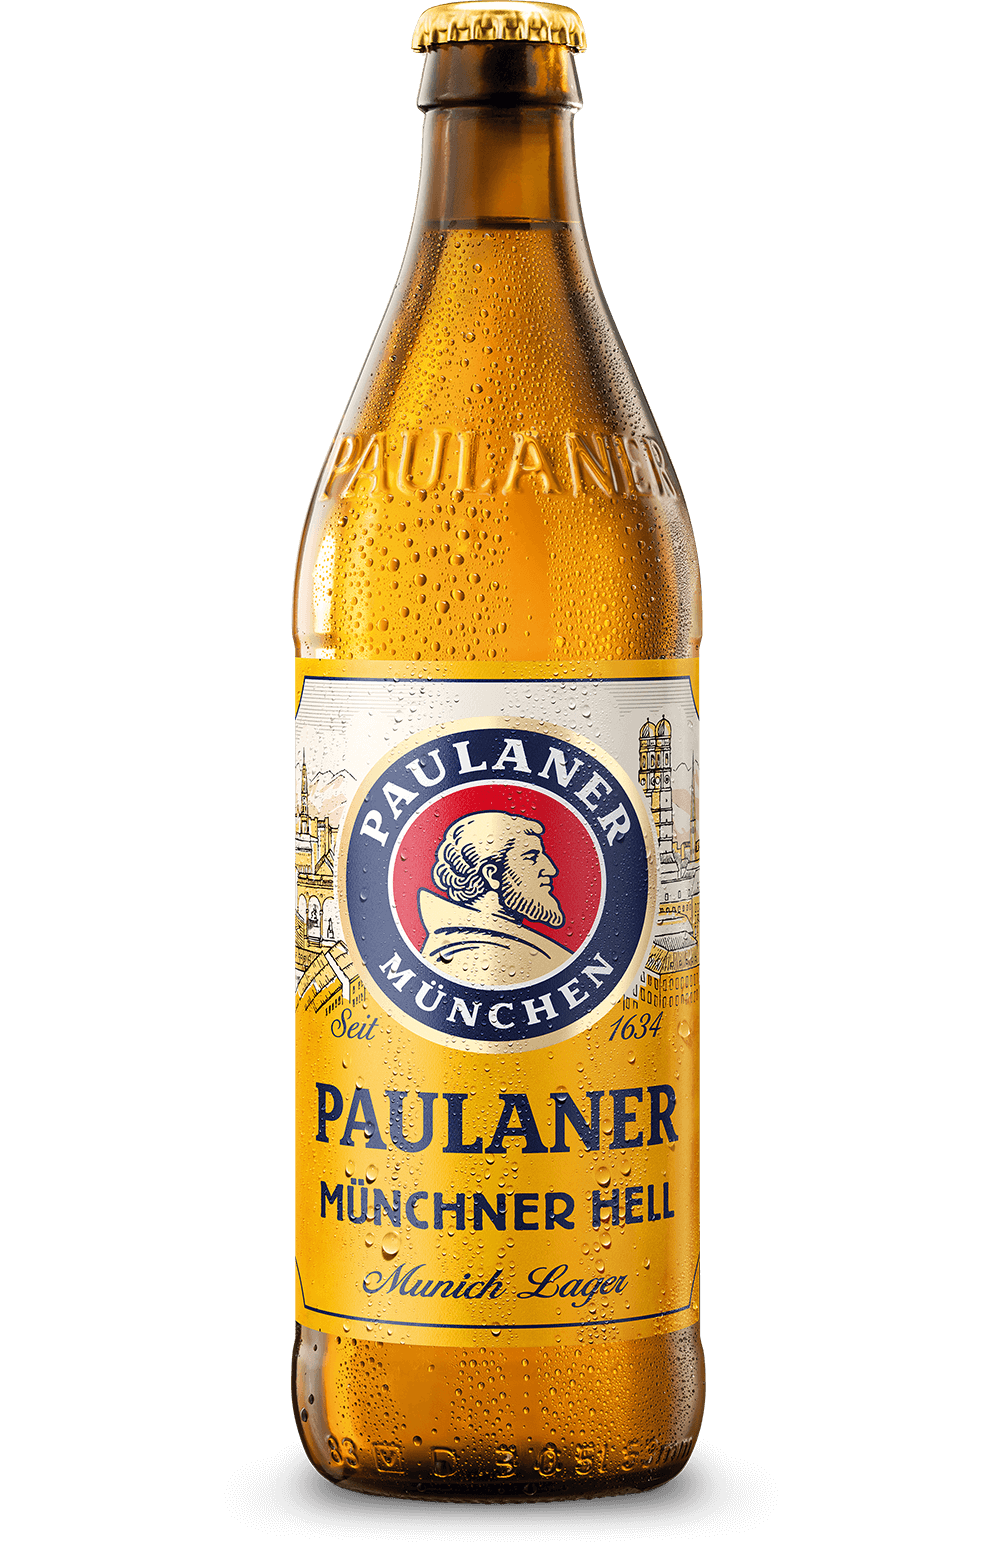 Münchner Hell - Paulaner Munchen - Munich Lager, 4.9%, 500ml Bottle